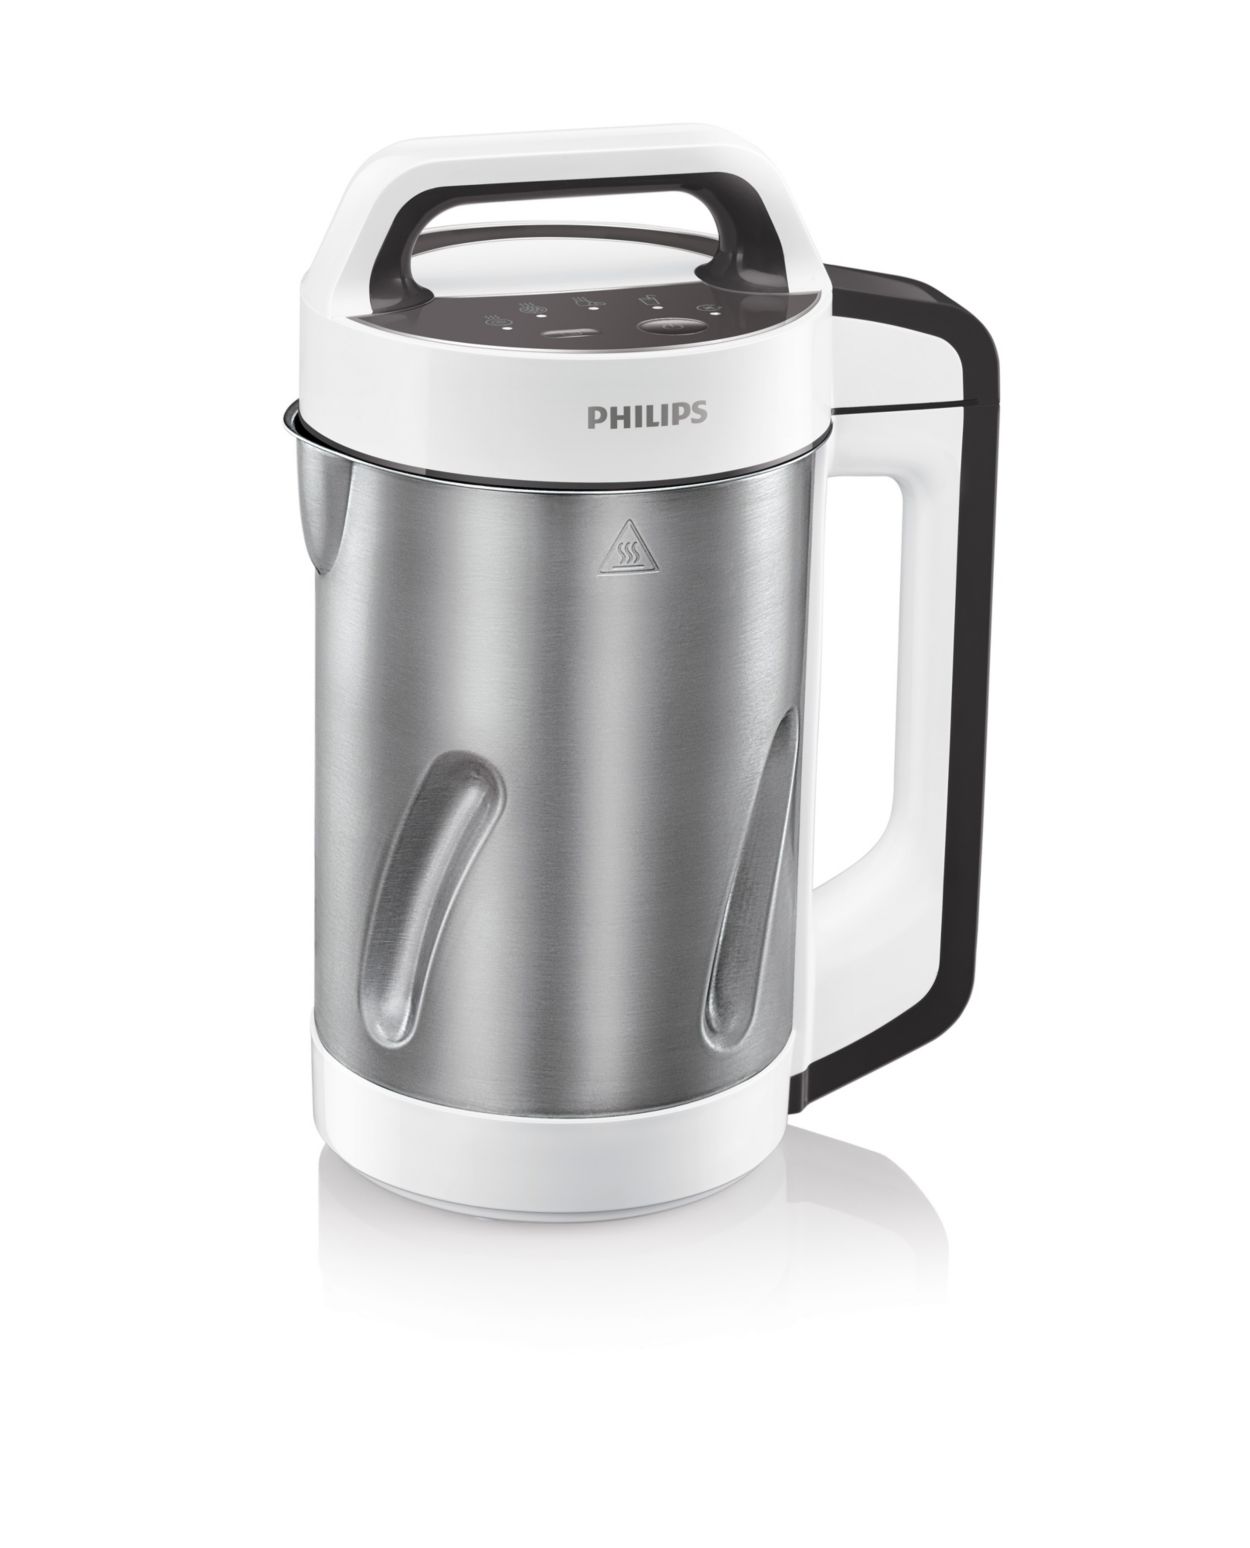 Philips' Soup Maker HR2201